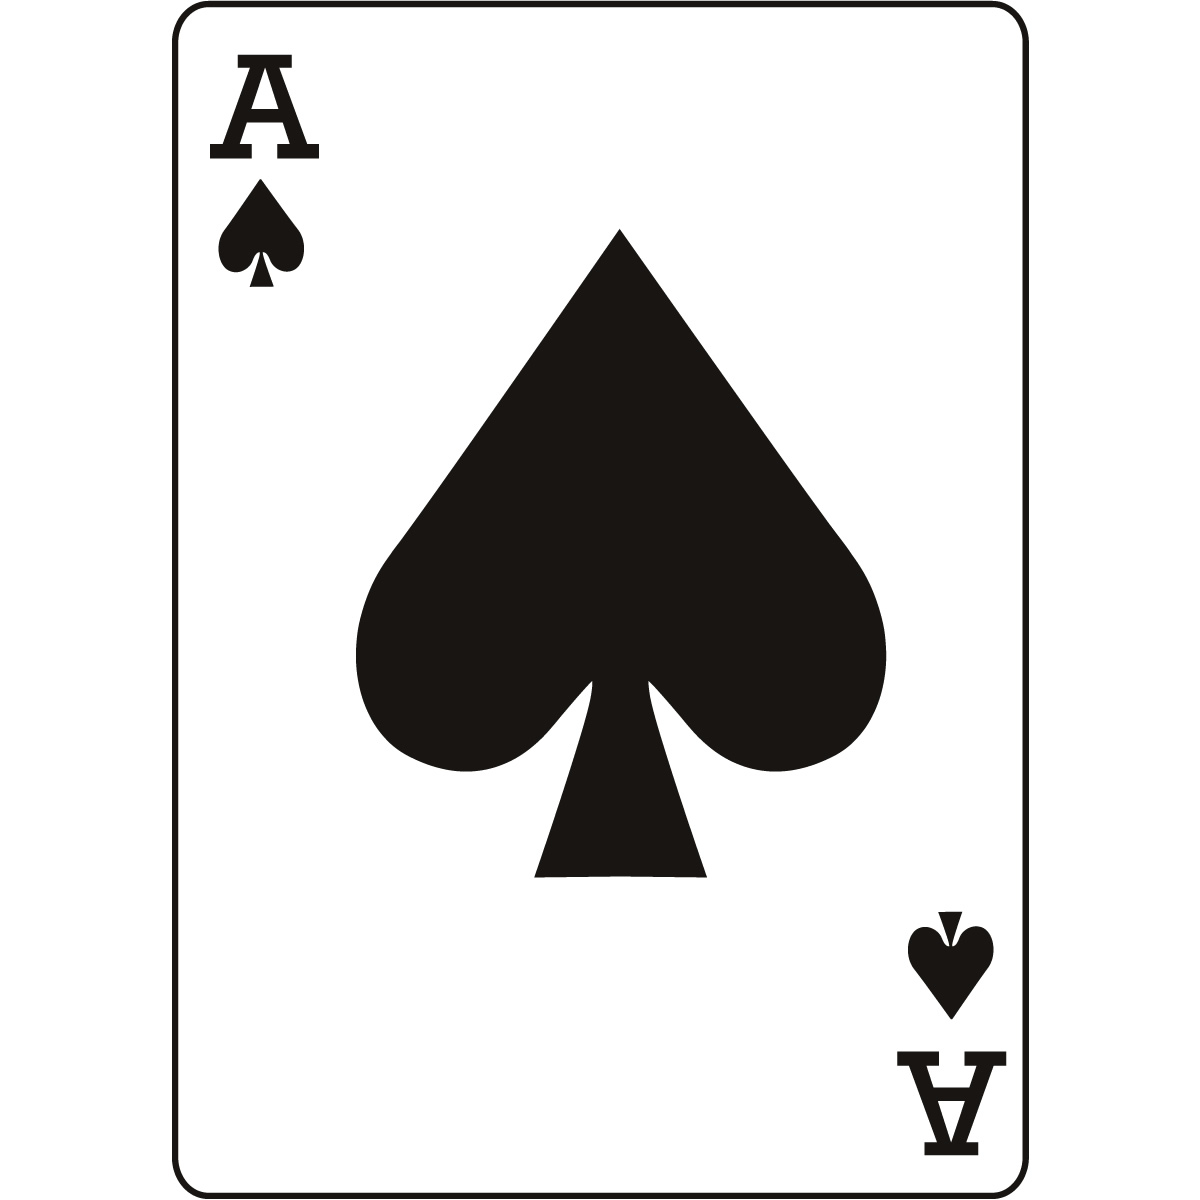 Ace of spades clipart - ClipartFox